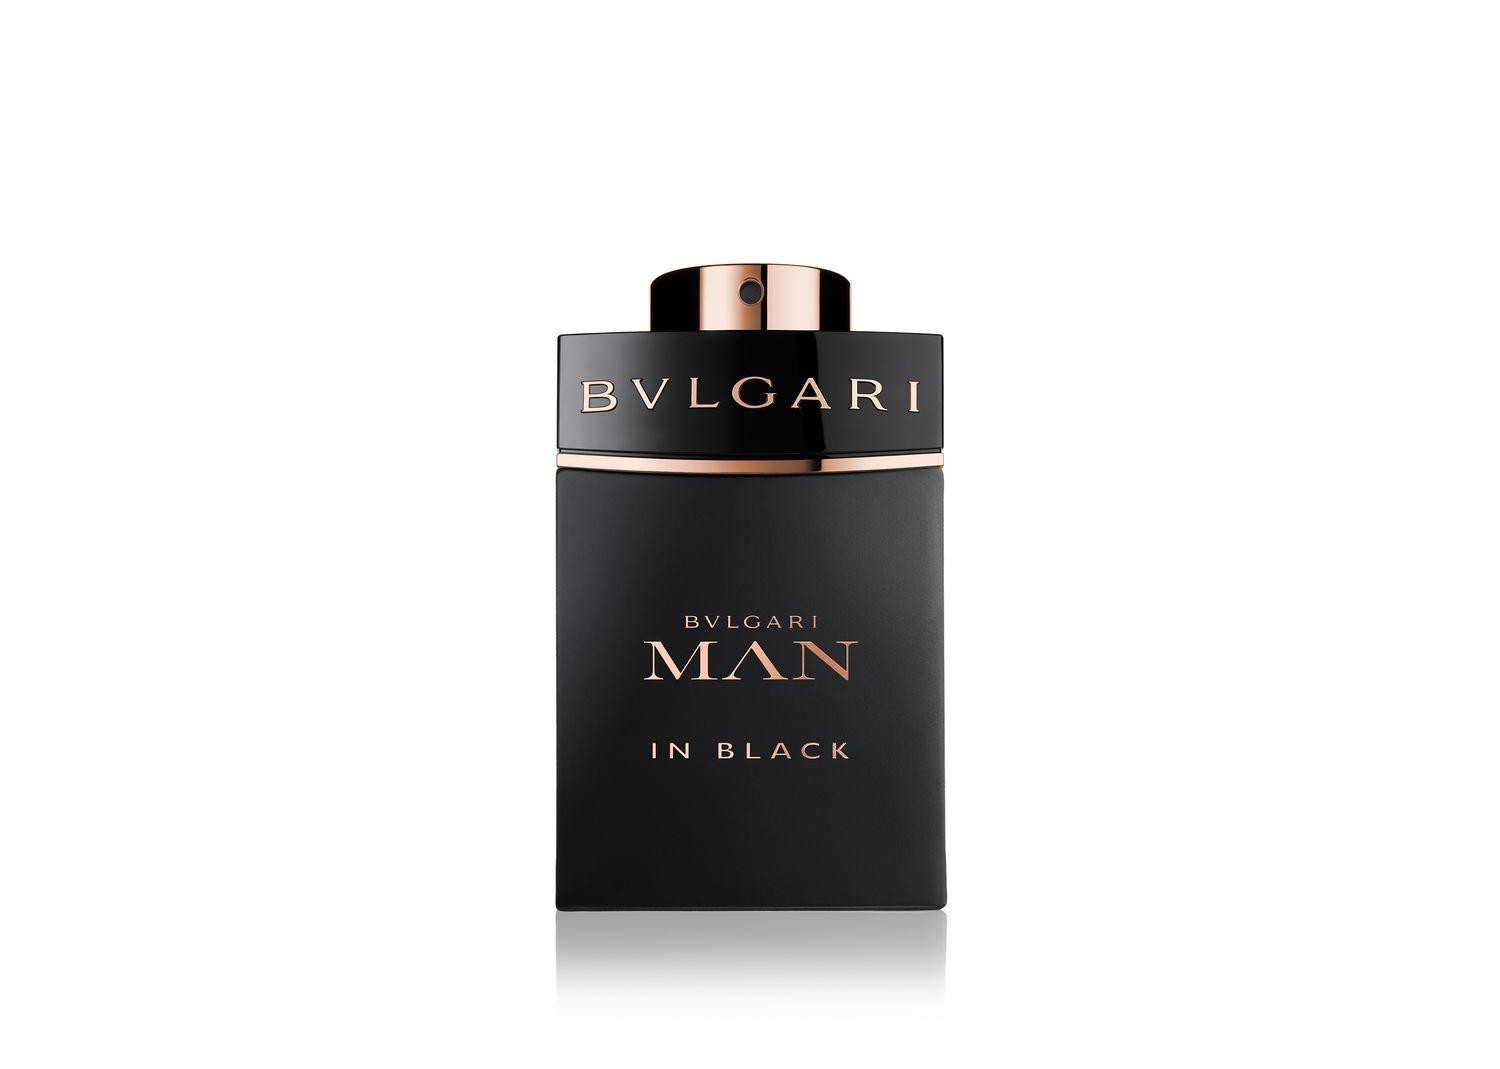 BVLGARI Man in Black eau de parfum 60ml